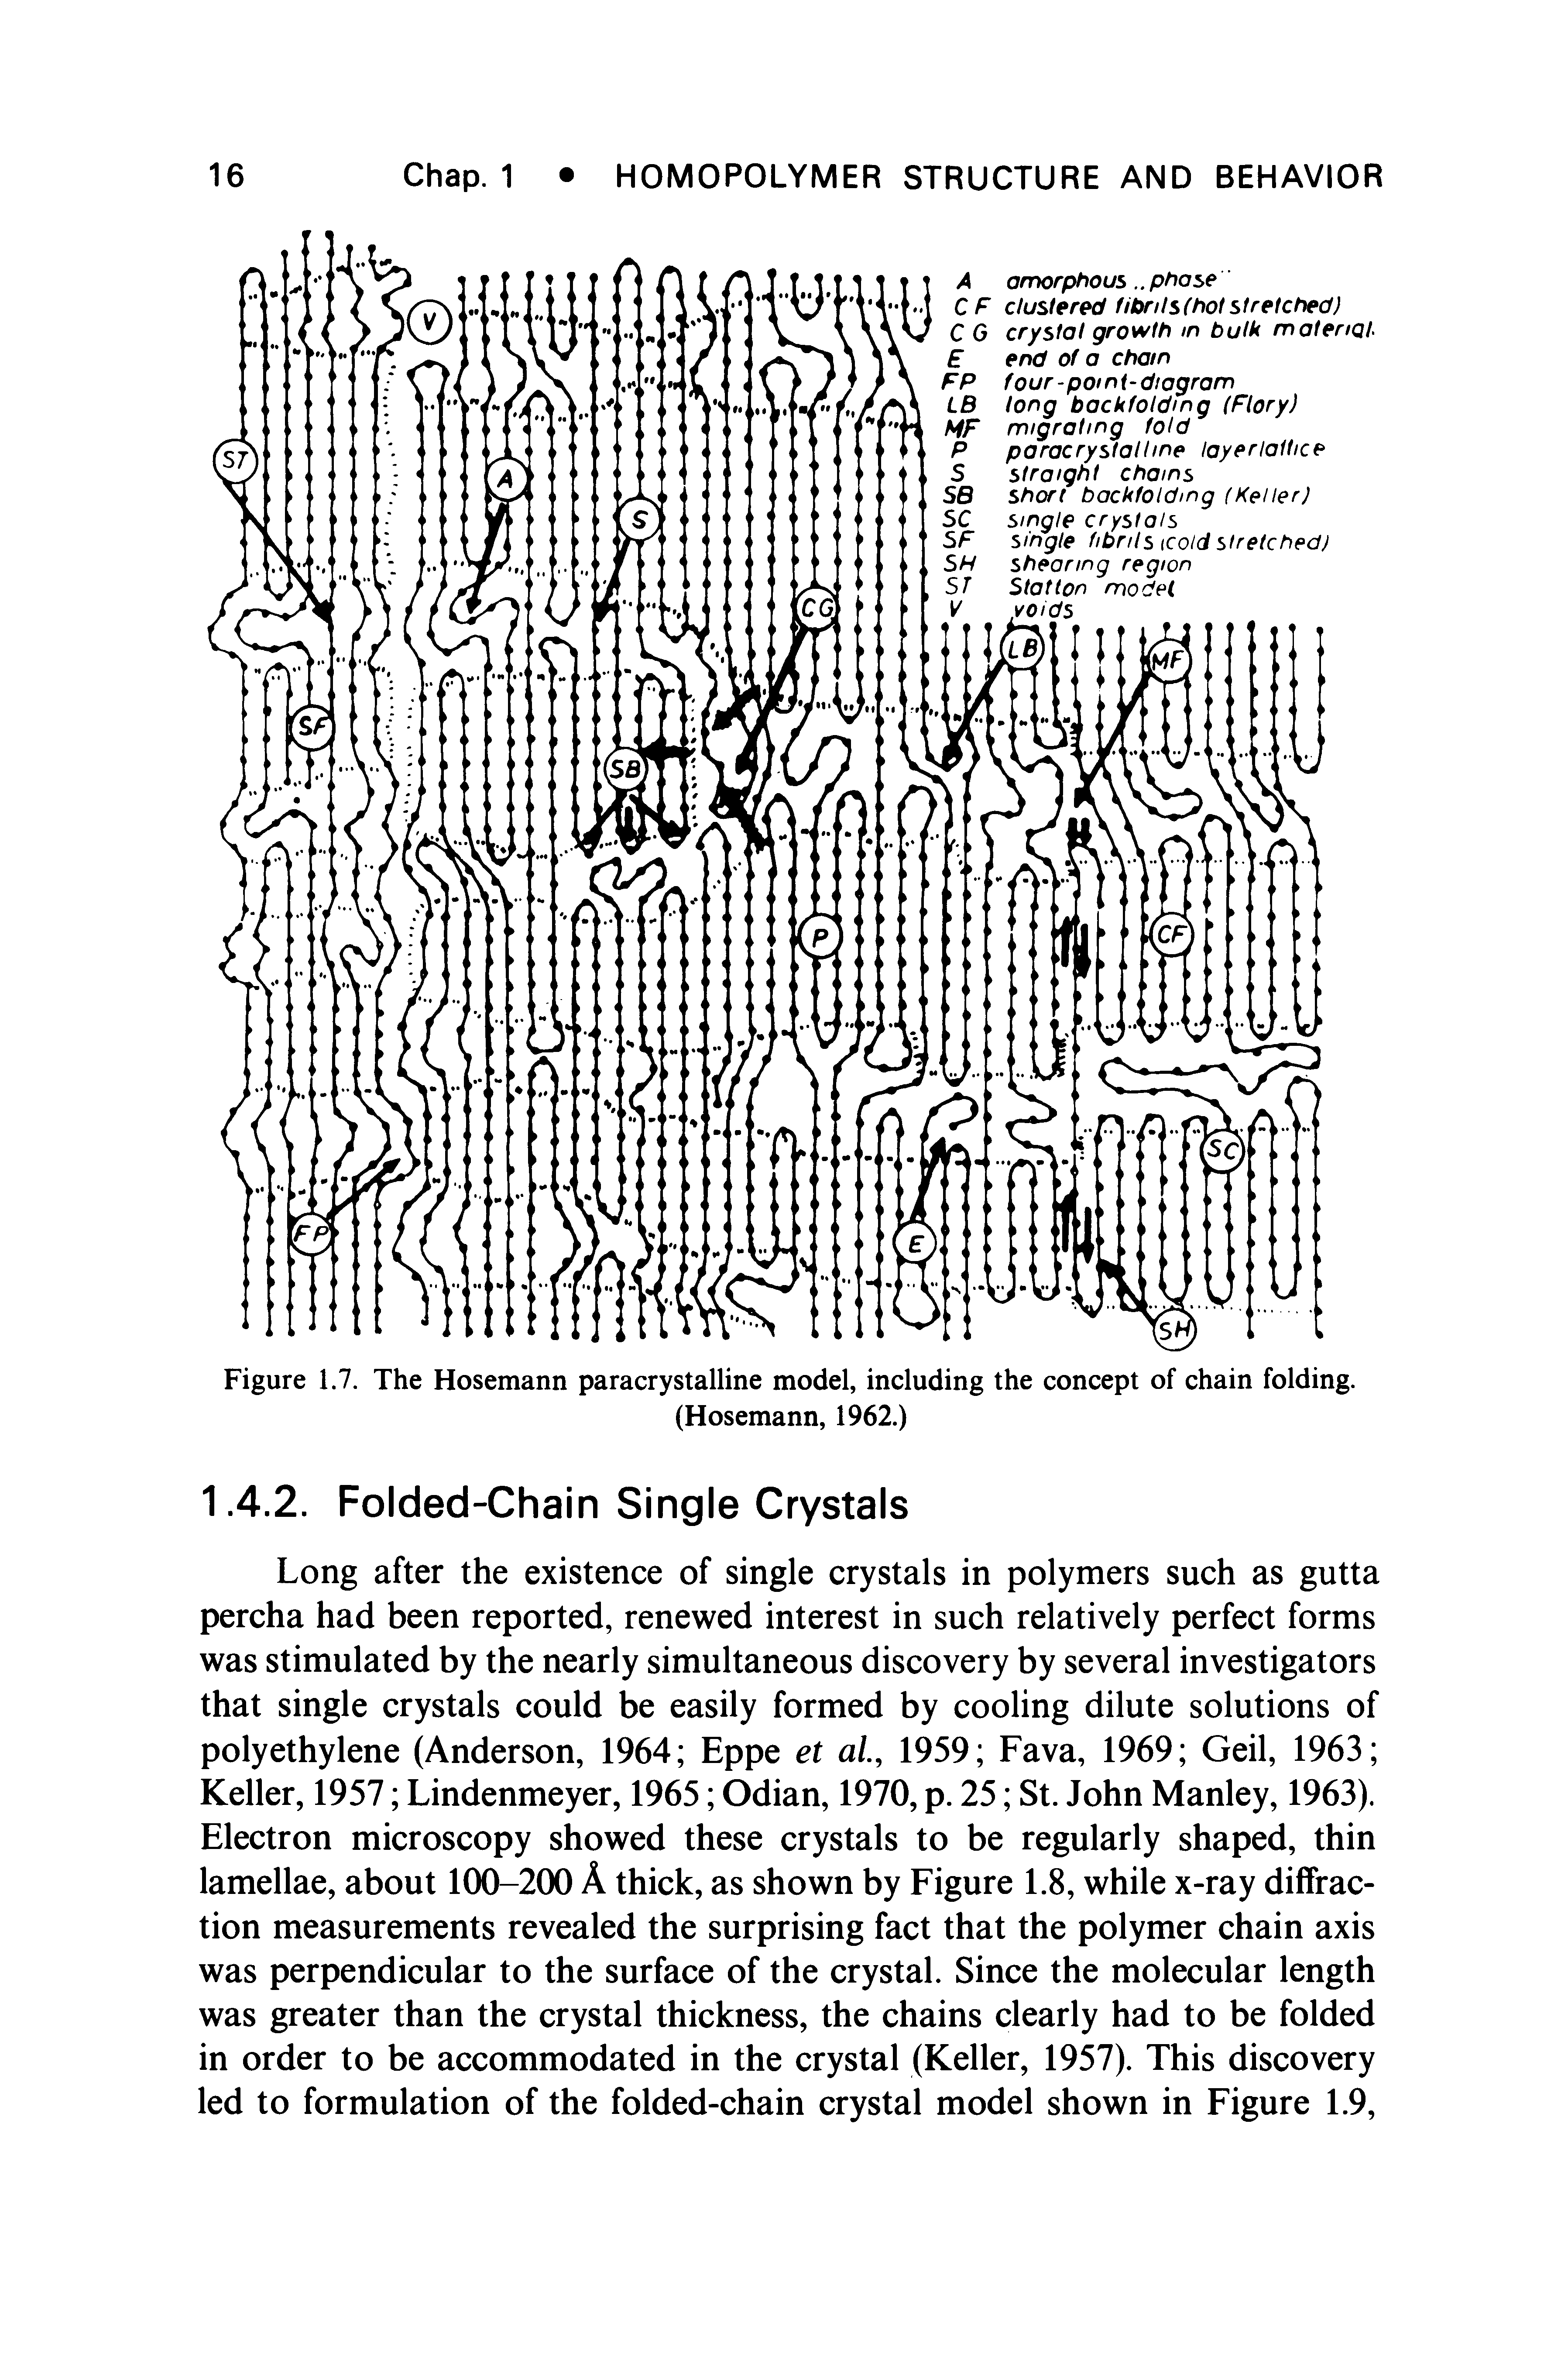 Figure 1.7. The Hosemann paracrystalline model, including the concept of chain folding.